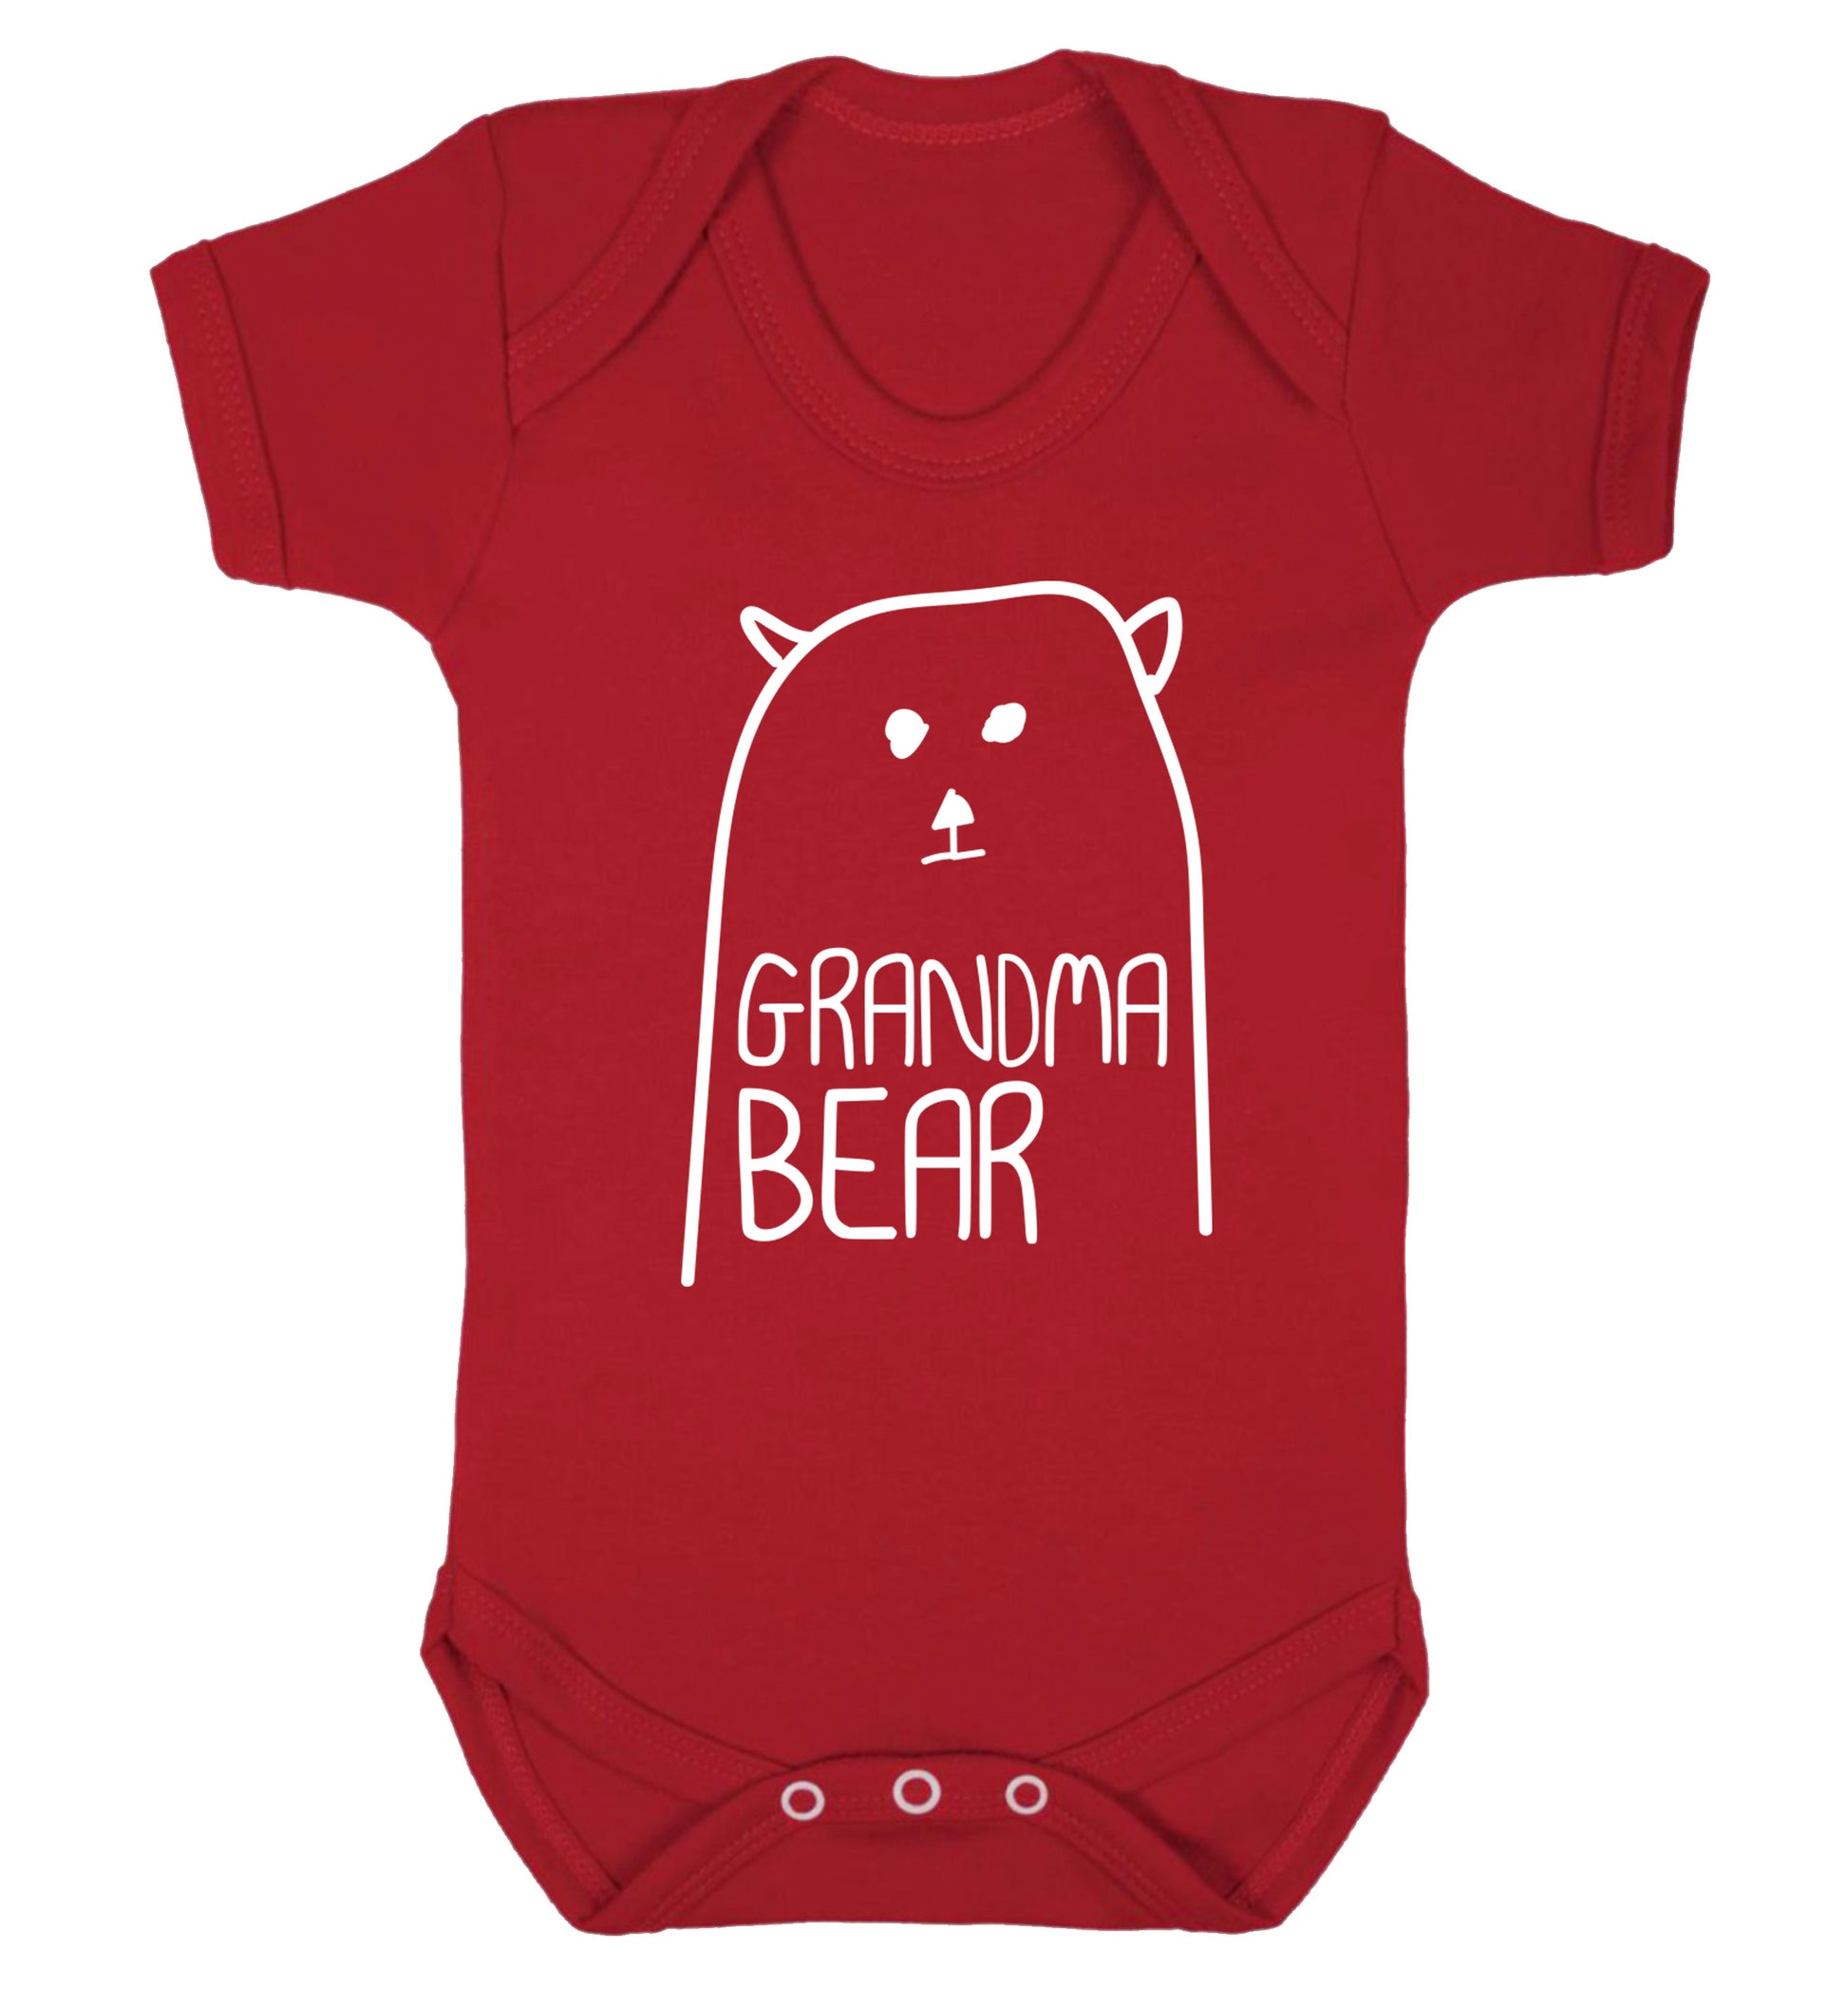 Grandma bear Baby Vest red 18-24 months